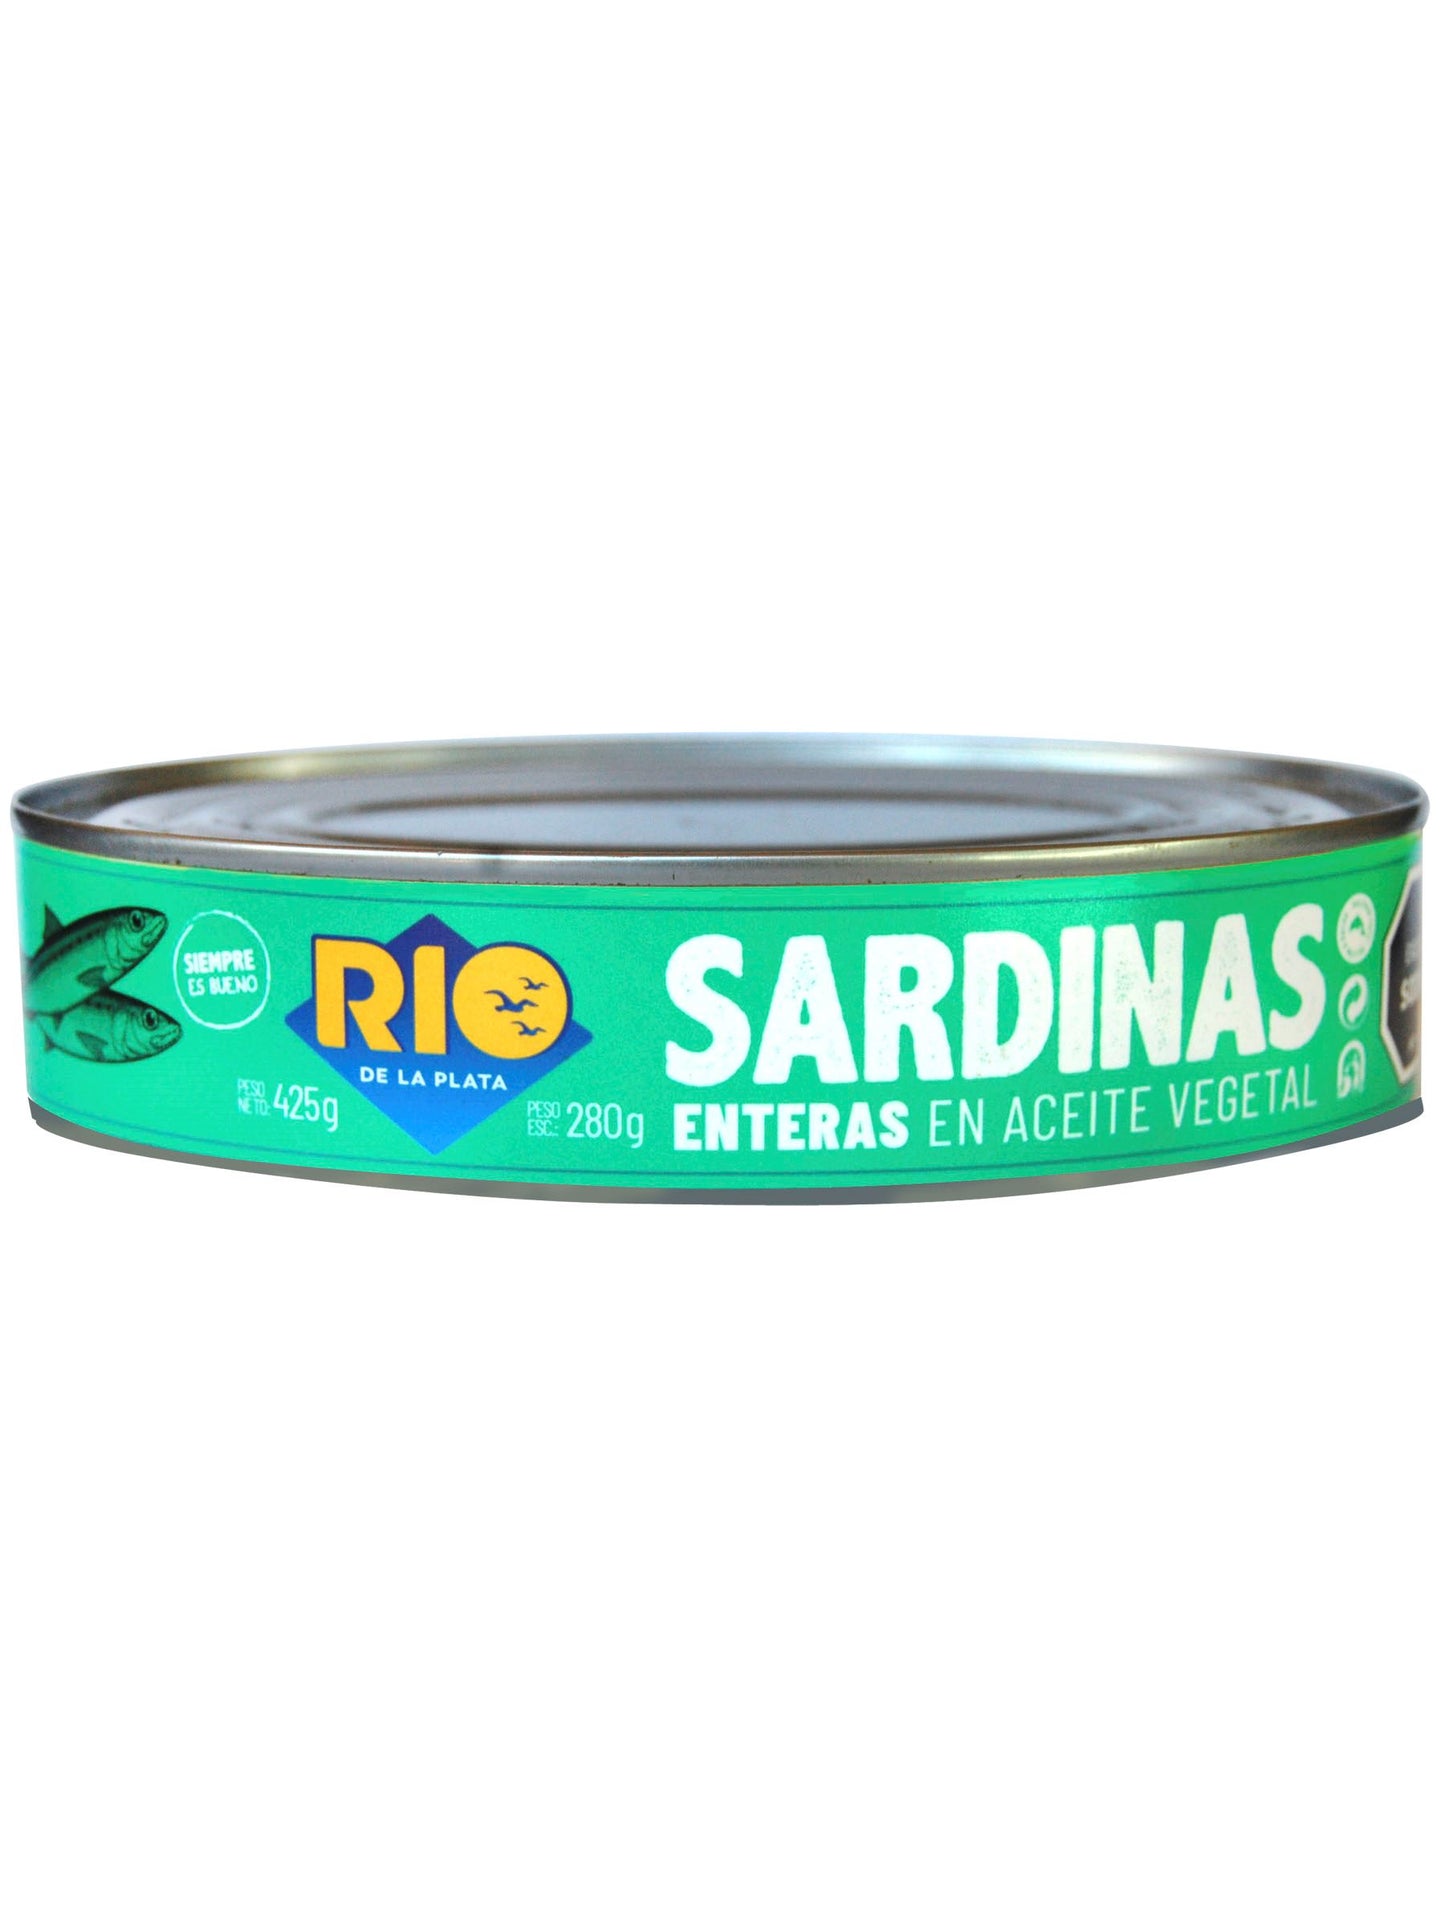 Sardina en lata oval 425 Grs. Río de la Plata